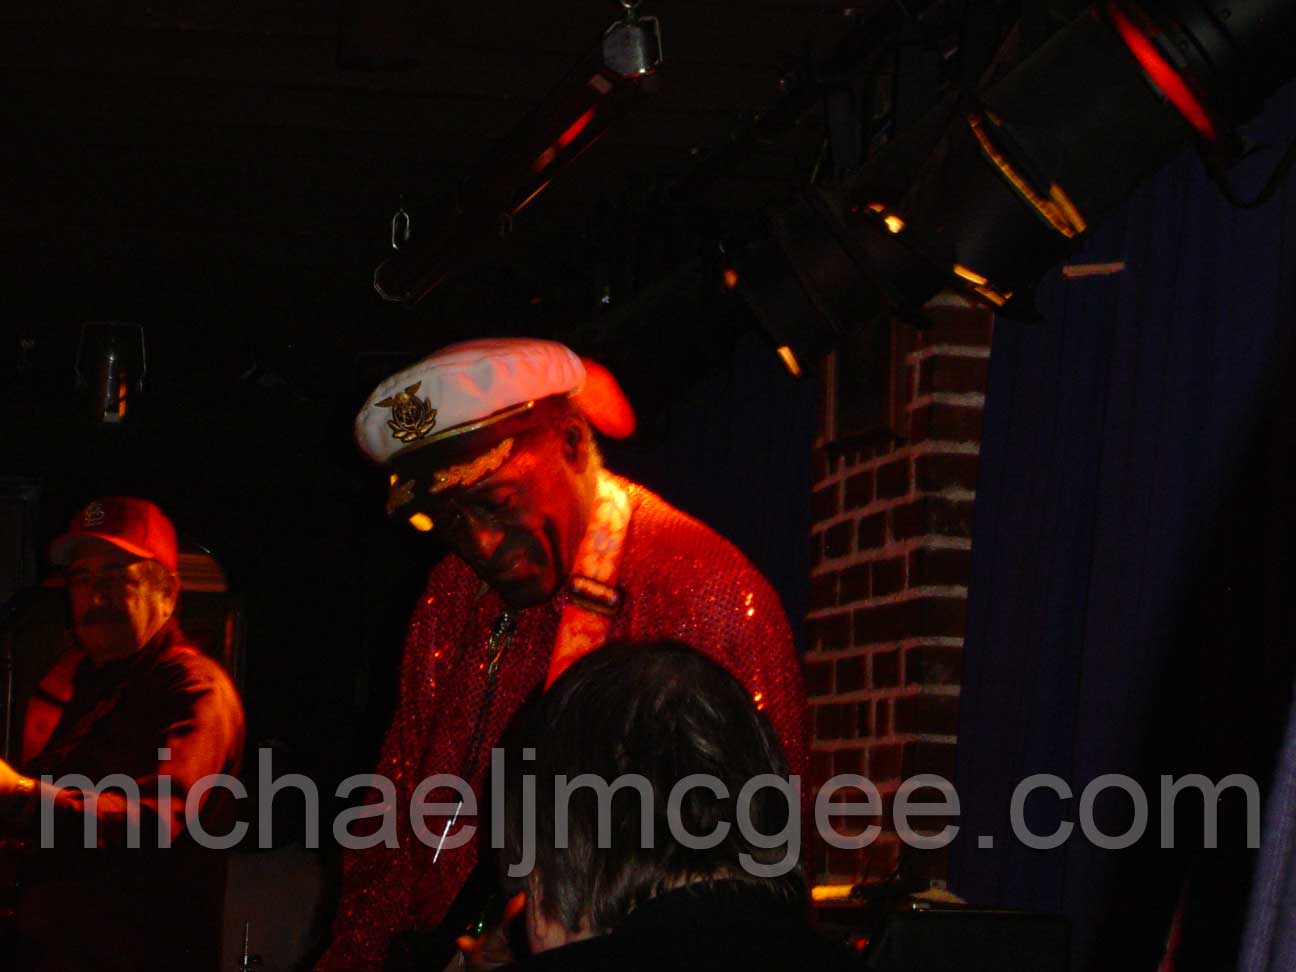 Chuck Berry / michaeljmcgee.com